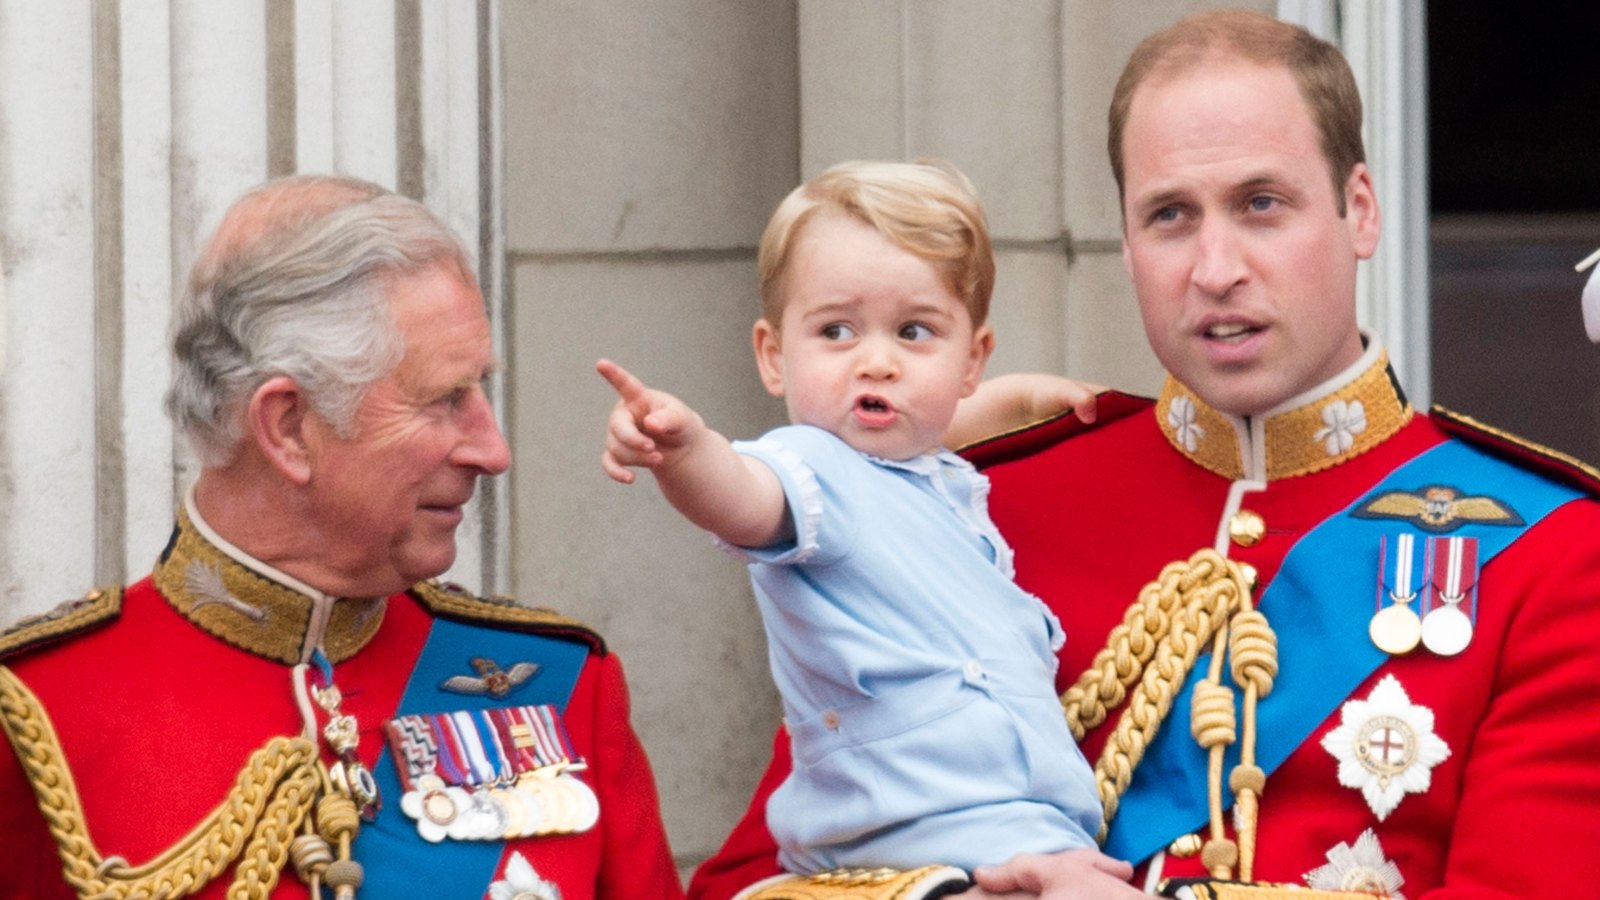 Prince Charles Prince William Prince George